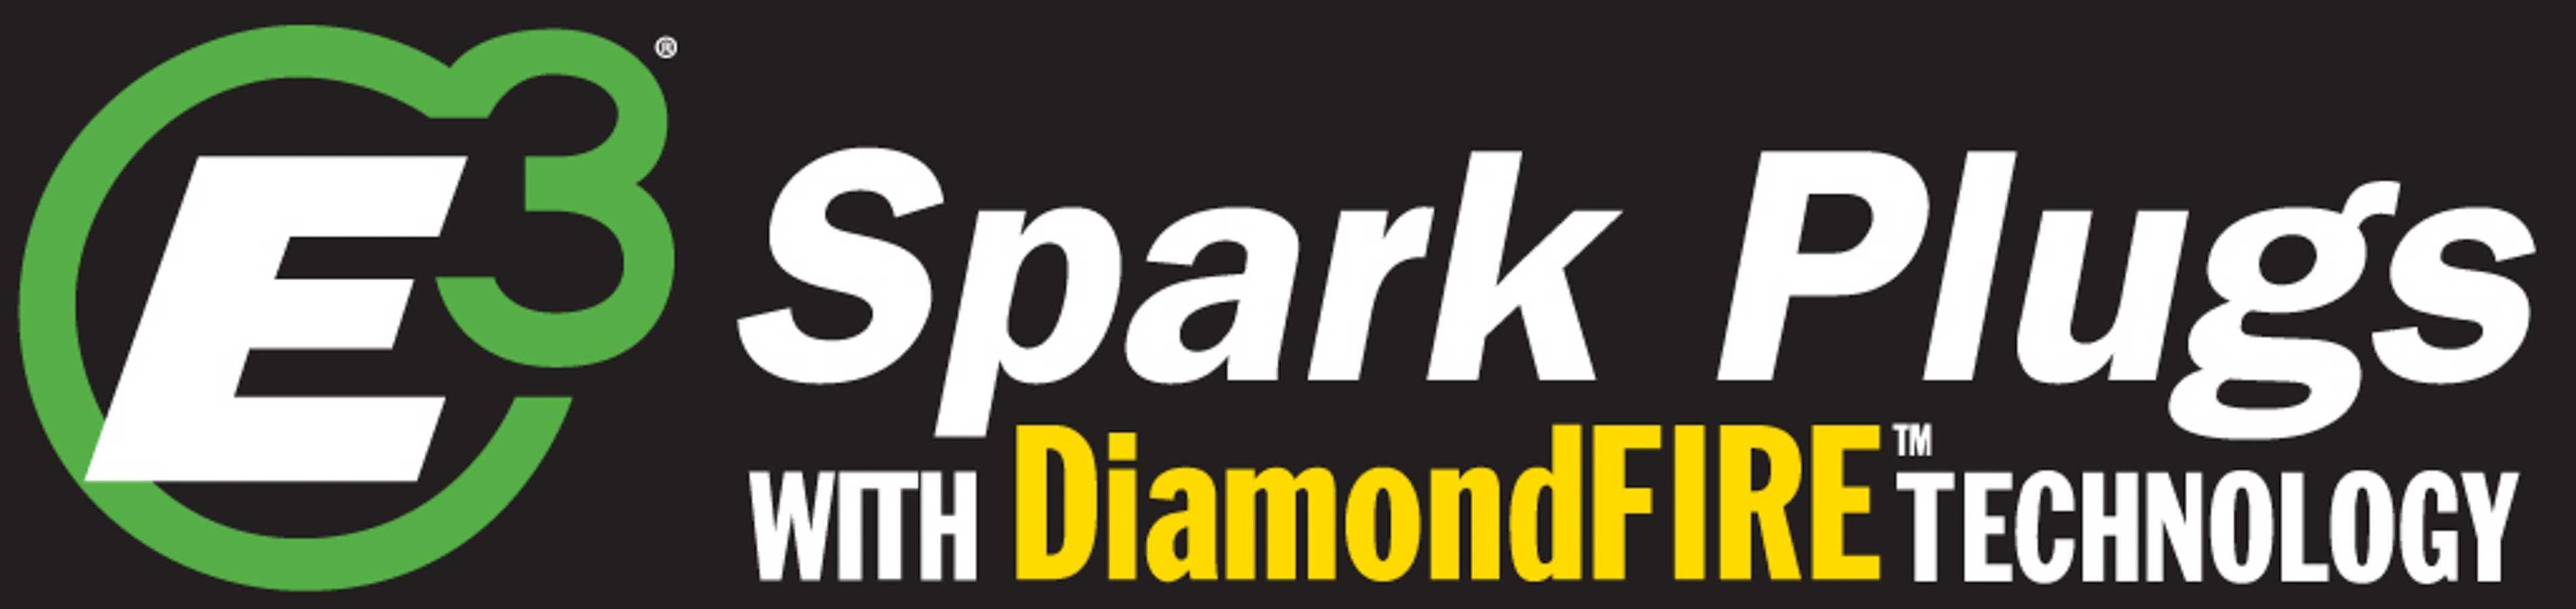 E3 Spark Plugs Logo - E3 Spark Plug Catalog 2012 - Etheridge Race Parts